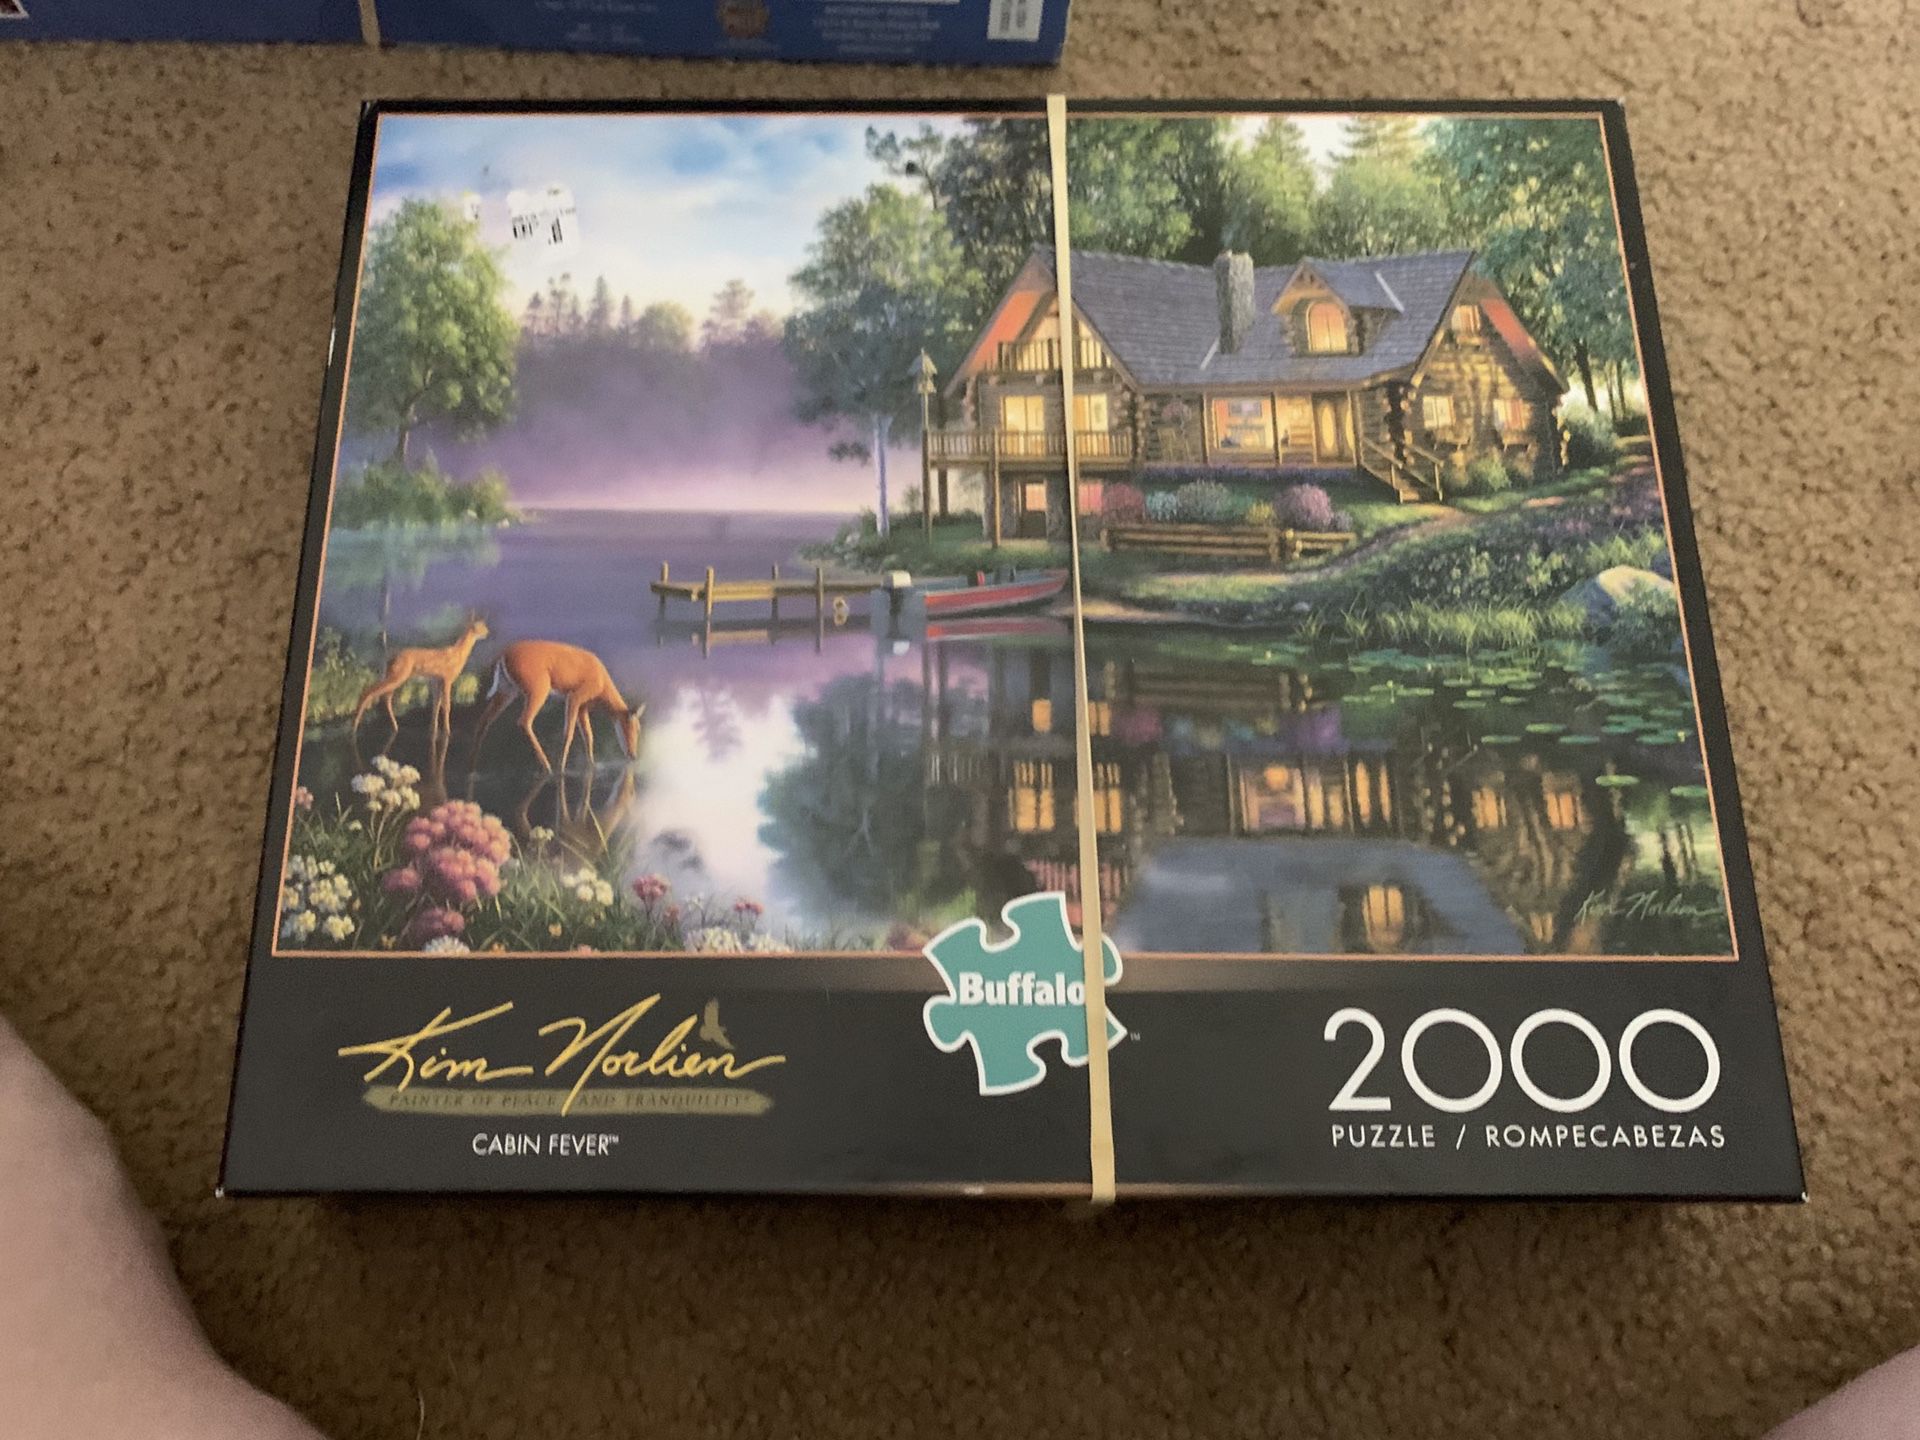 2000 piece puzzles